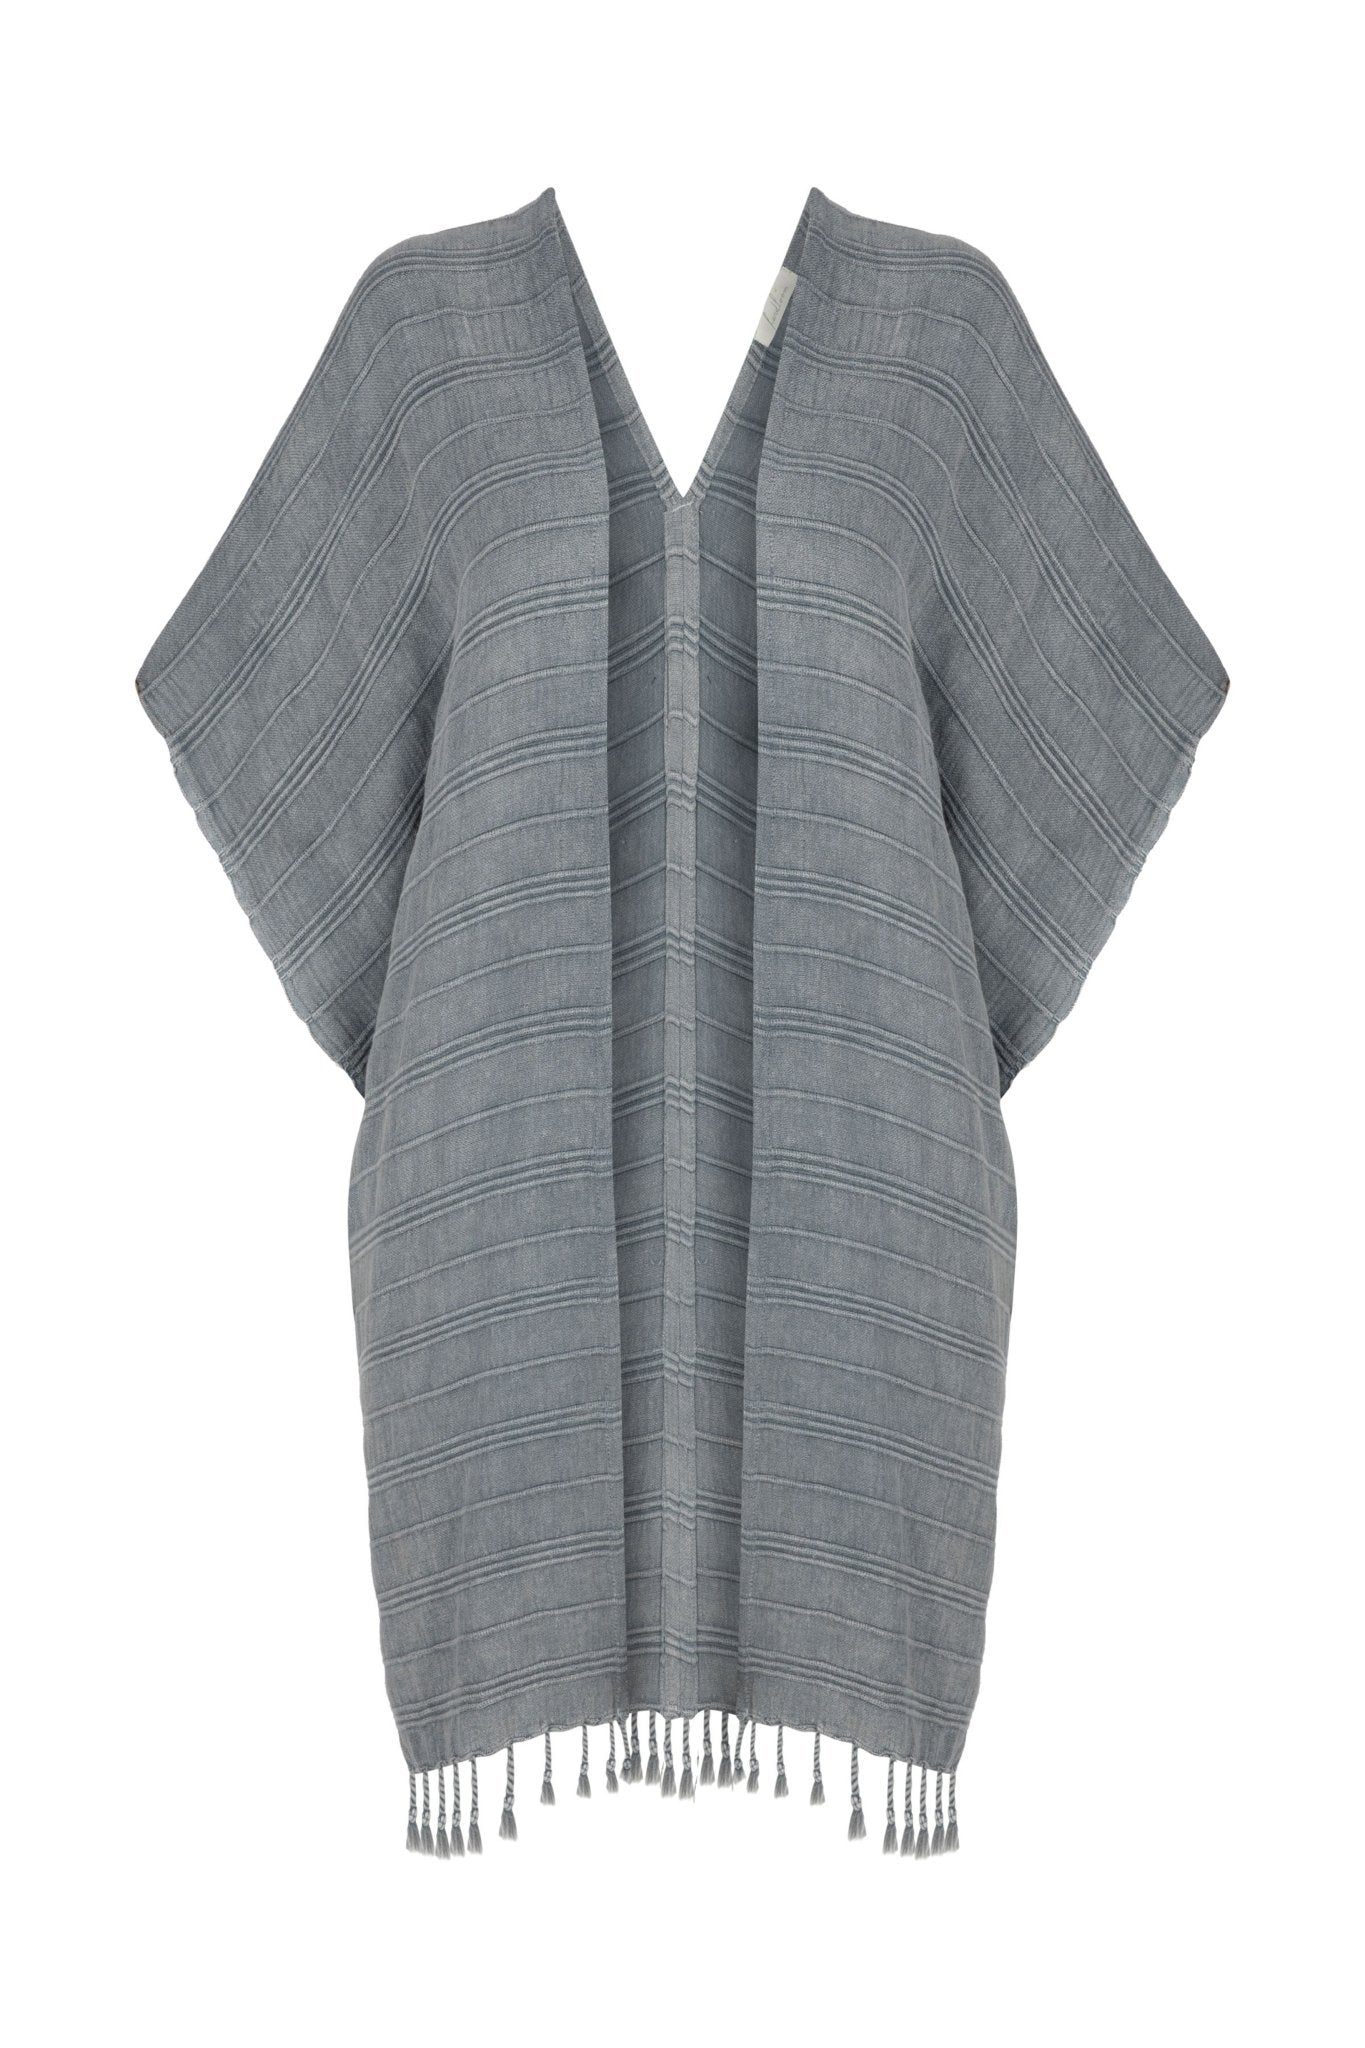 Gece V Back Kimono - Stone by The Handloom